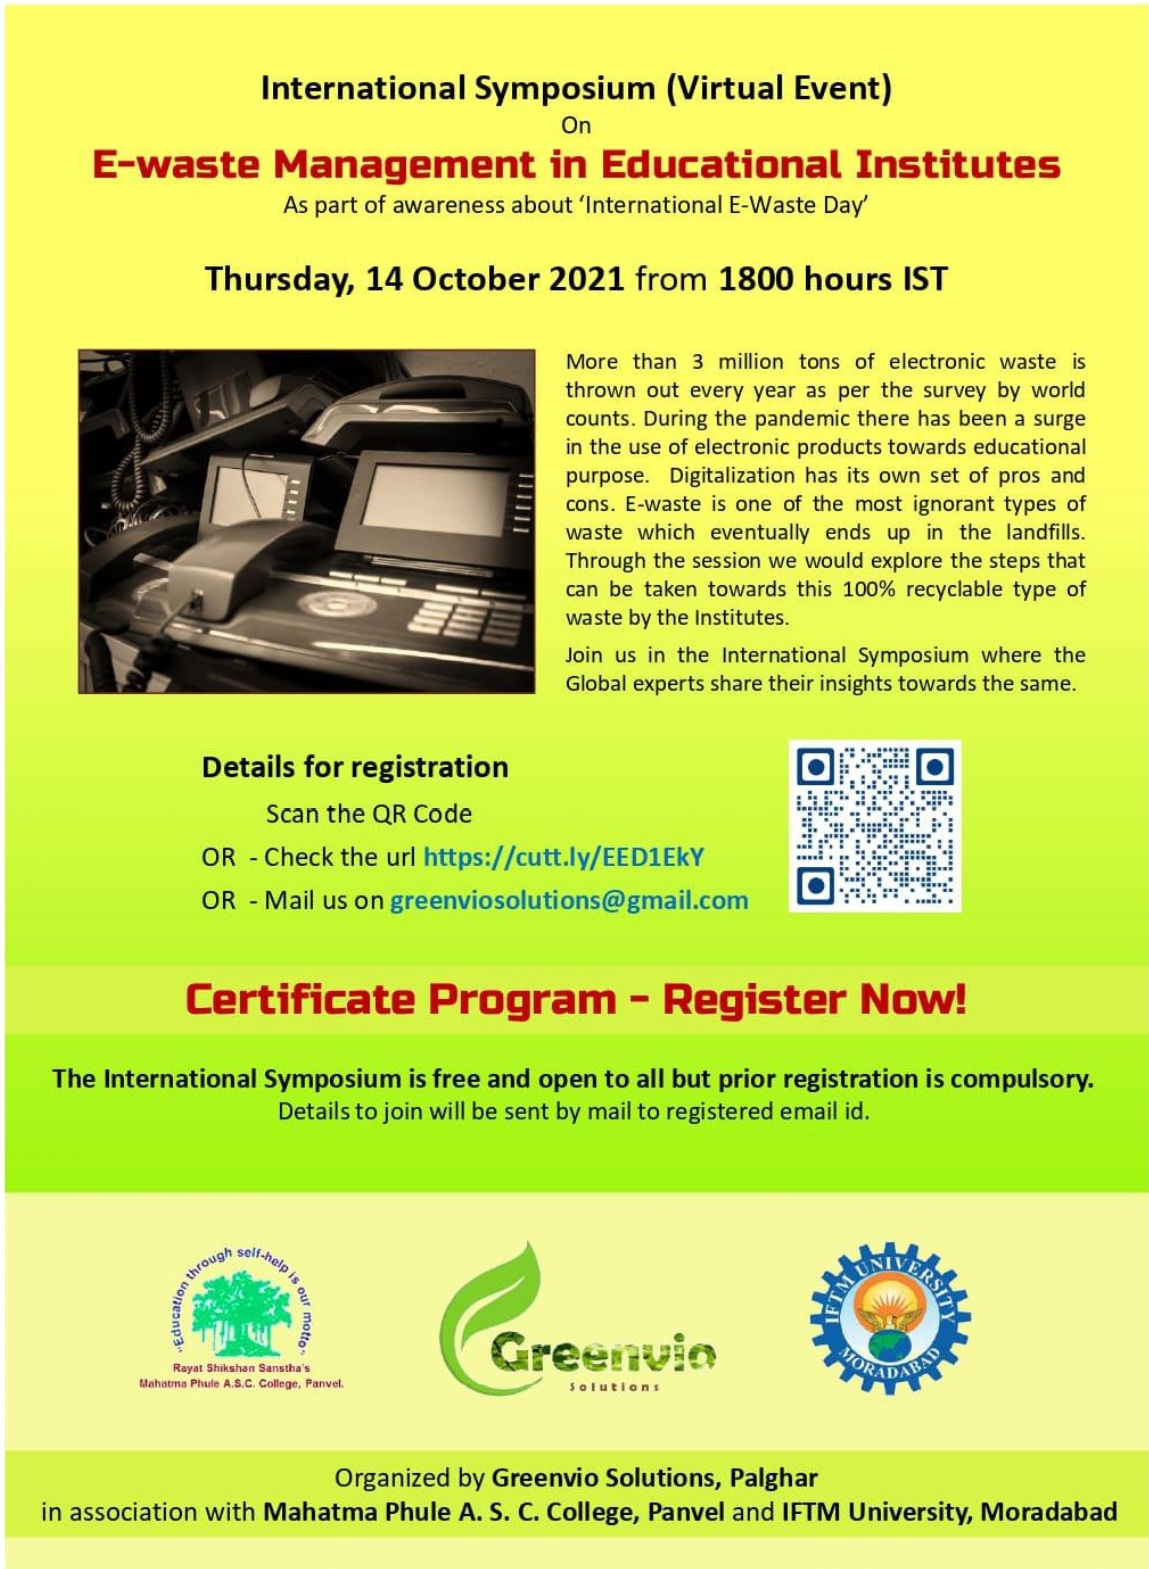 International Symposium on E-Waste Management in Educational Institutes